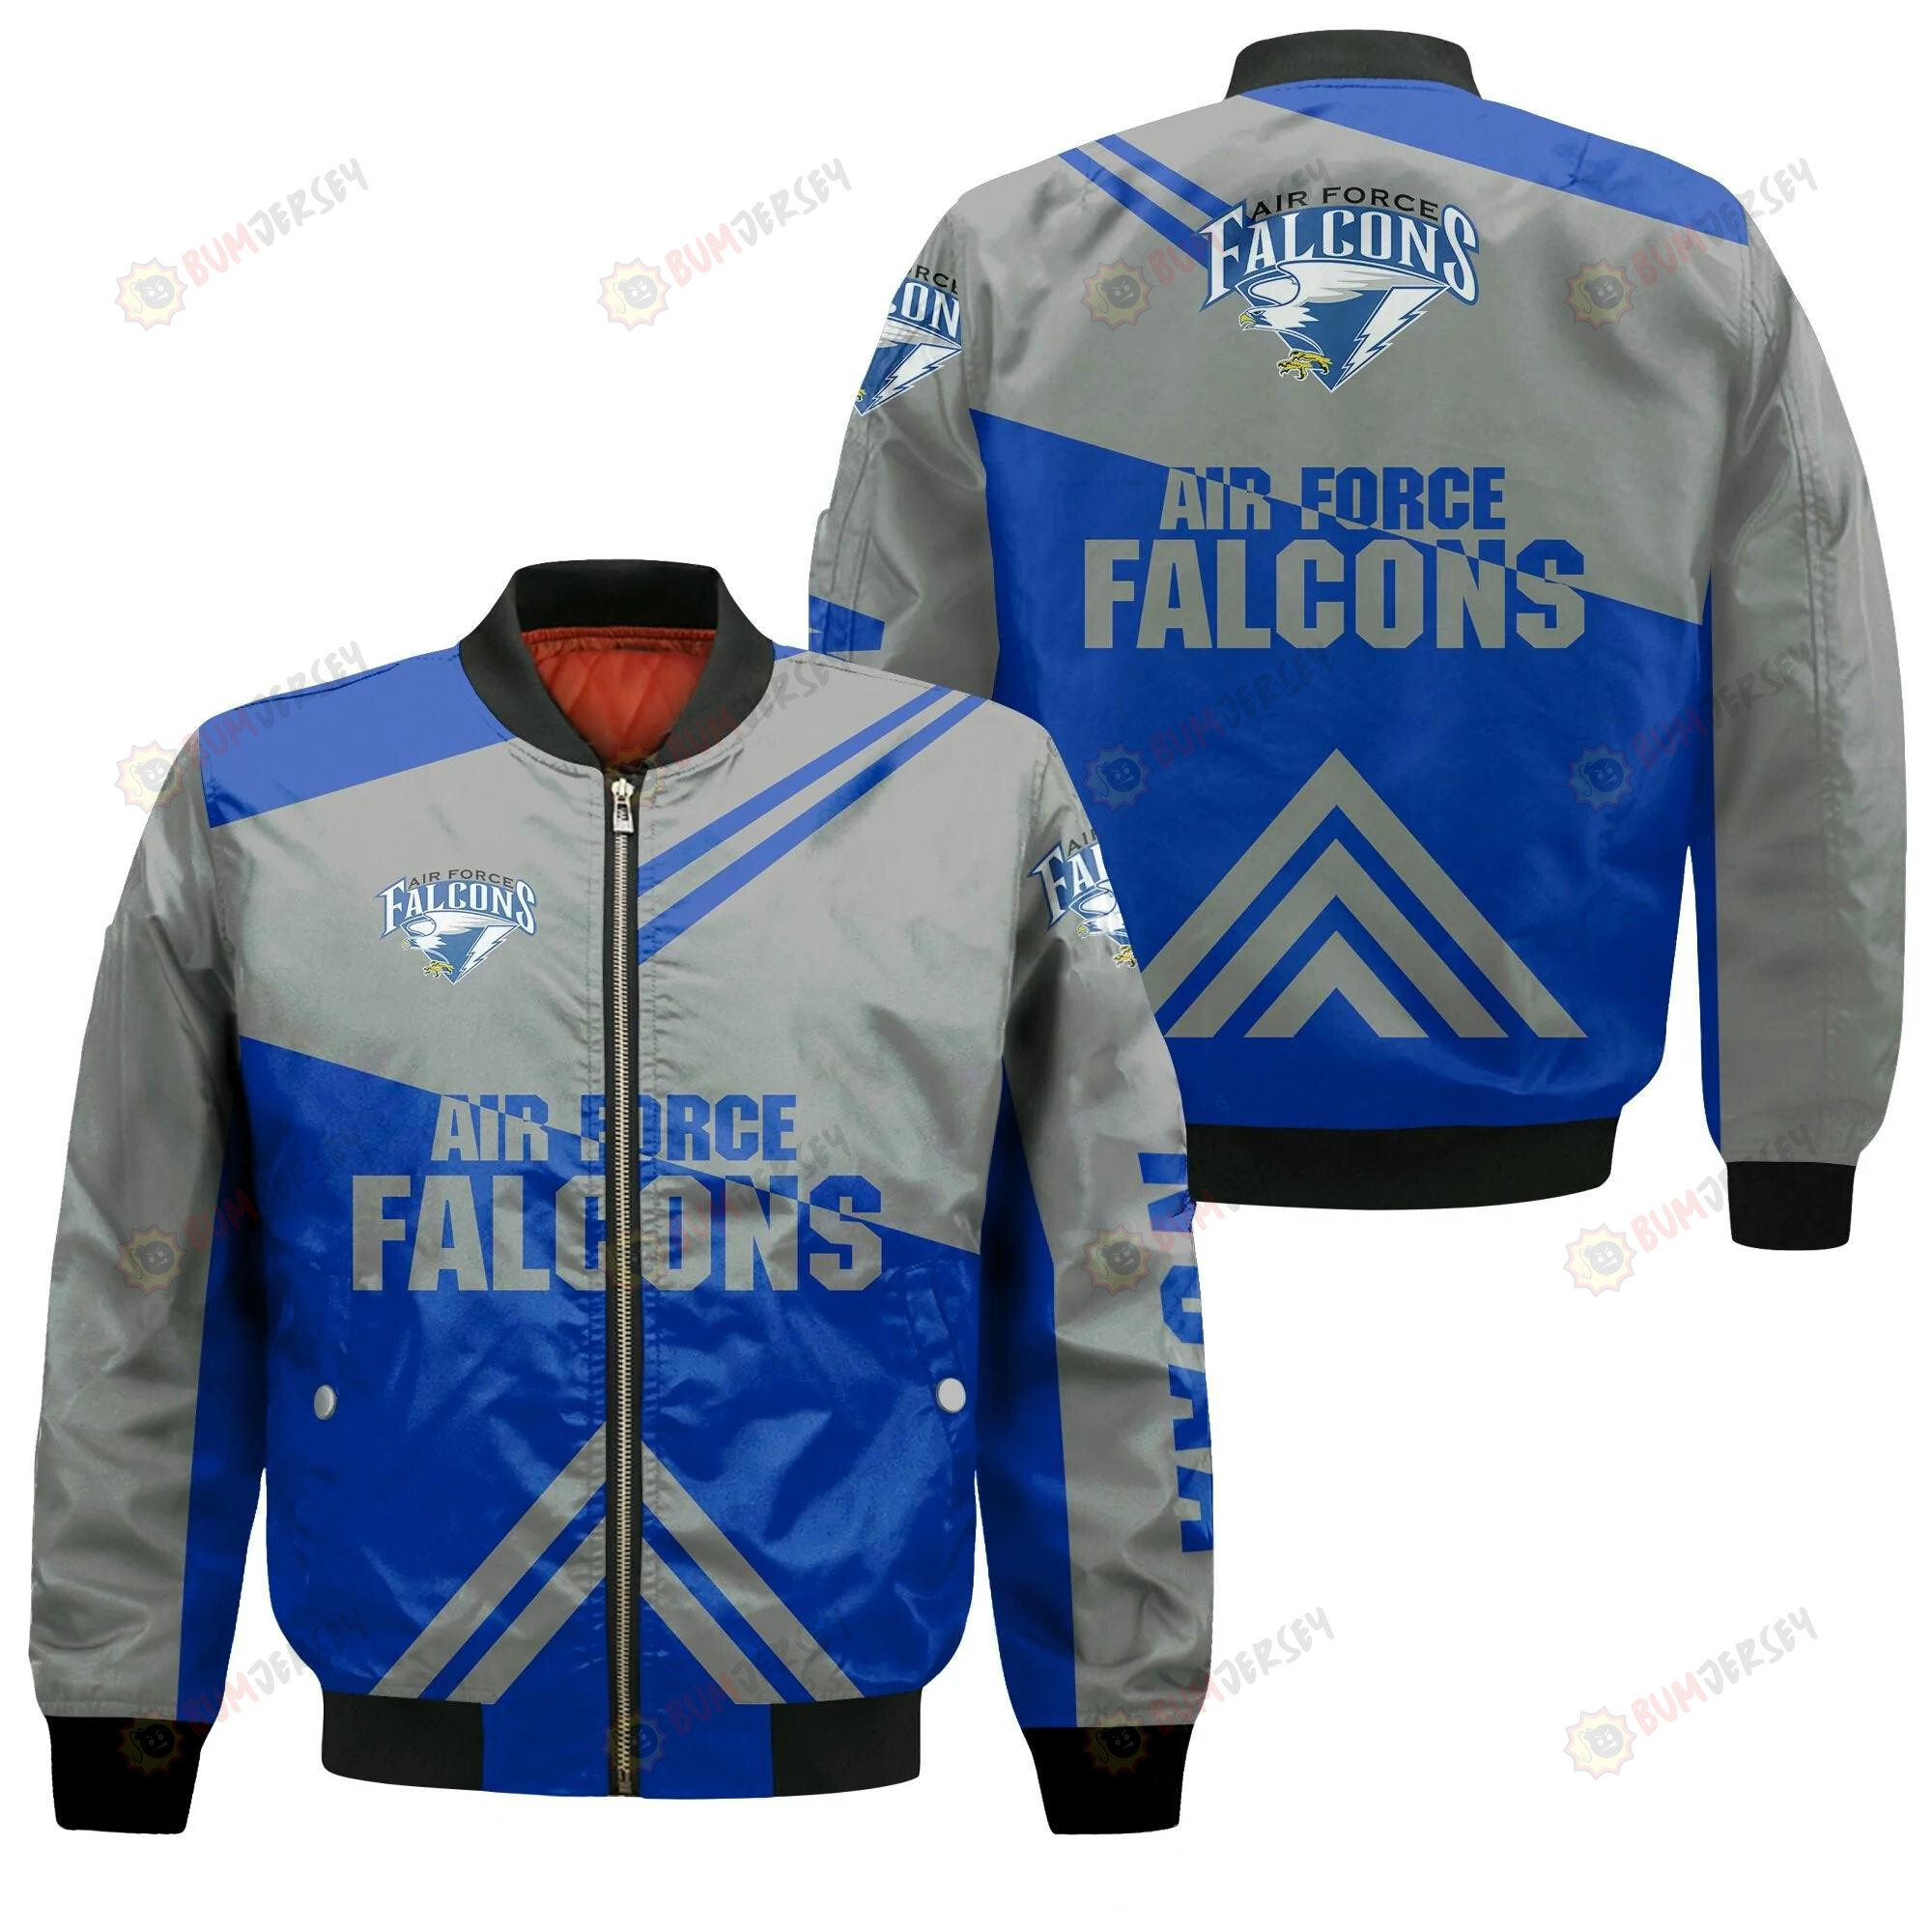 Air Force Falcons Football Bomber Jacket 3D Printed - Stripes Cross Shoulders